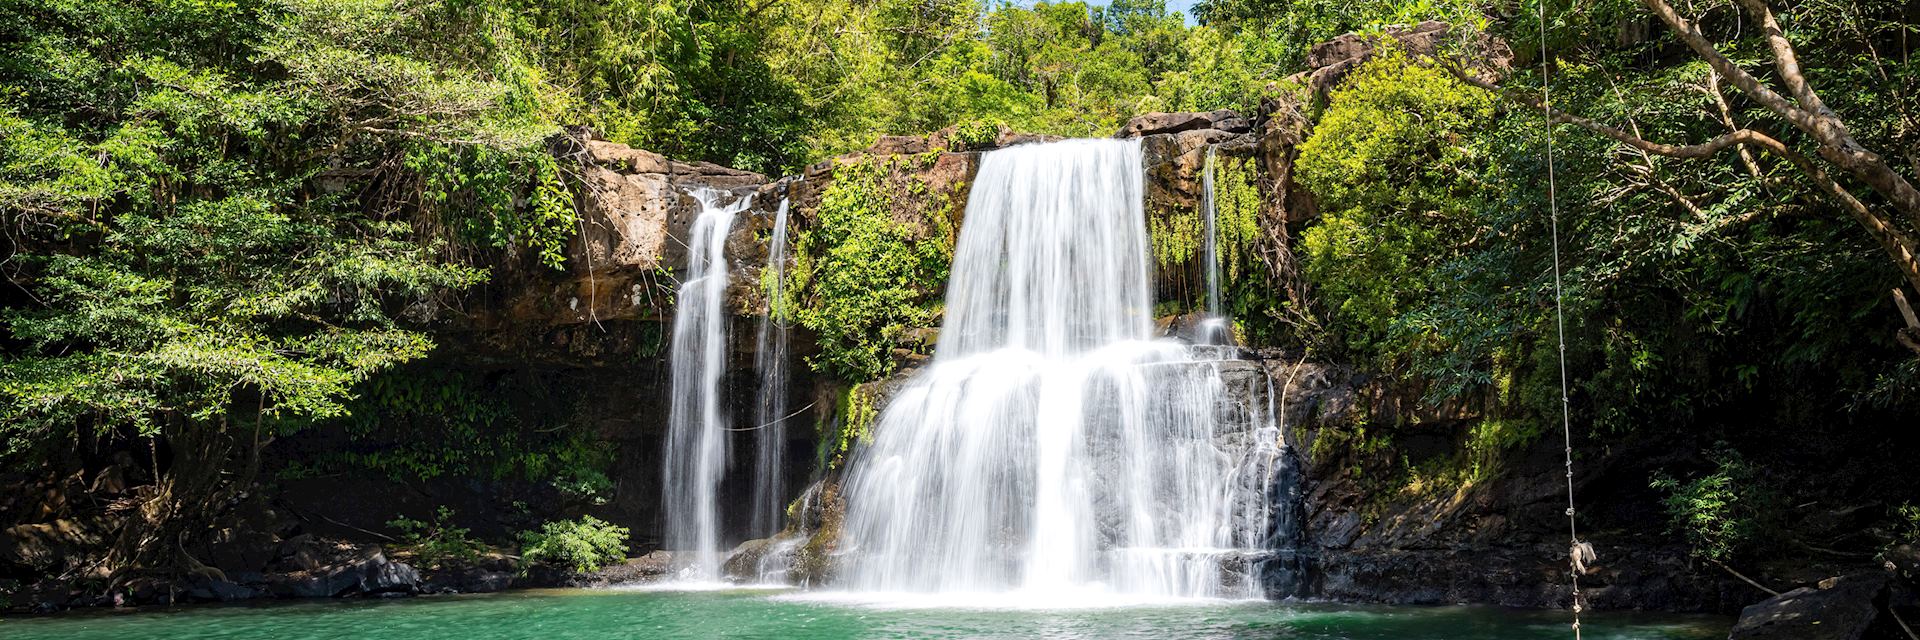 Klong Chao waterfall